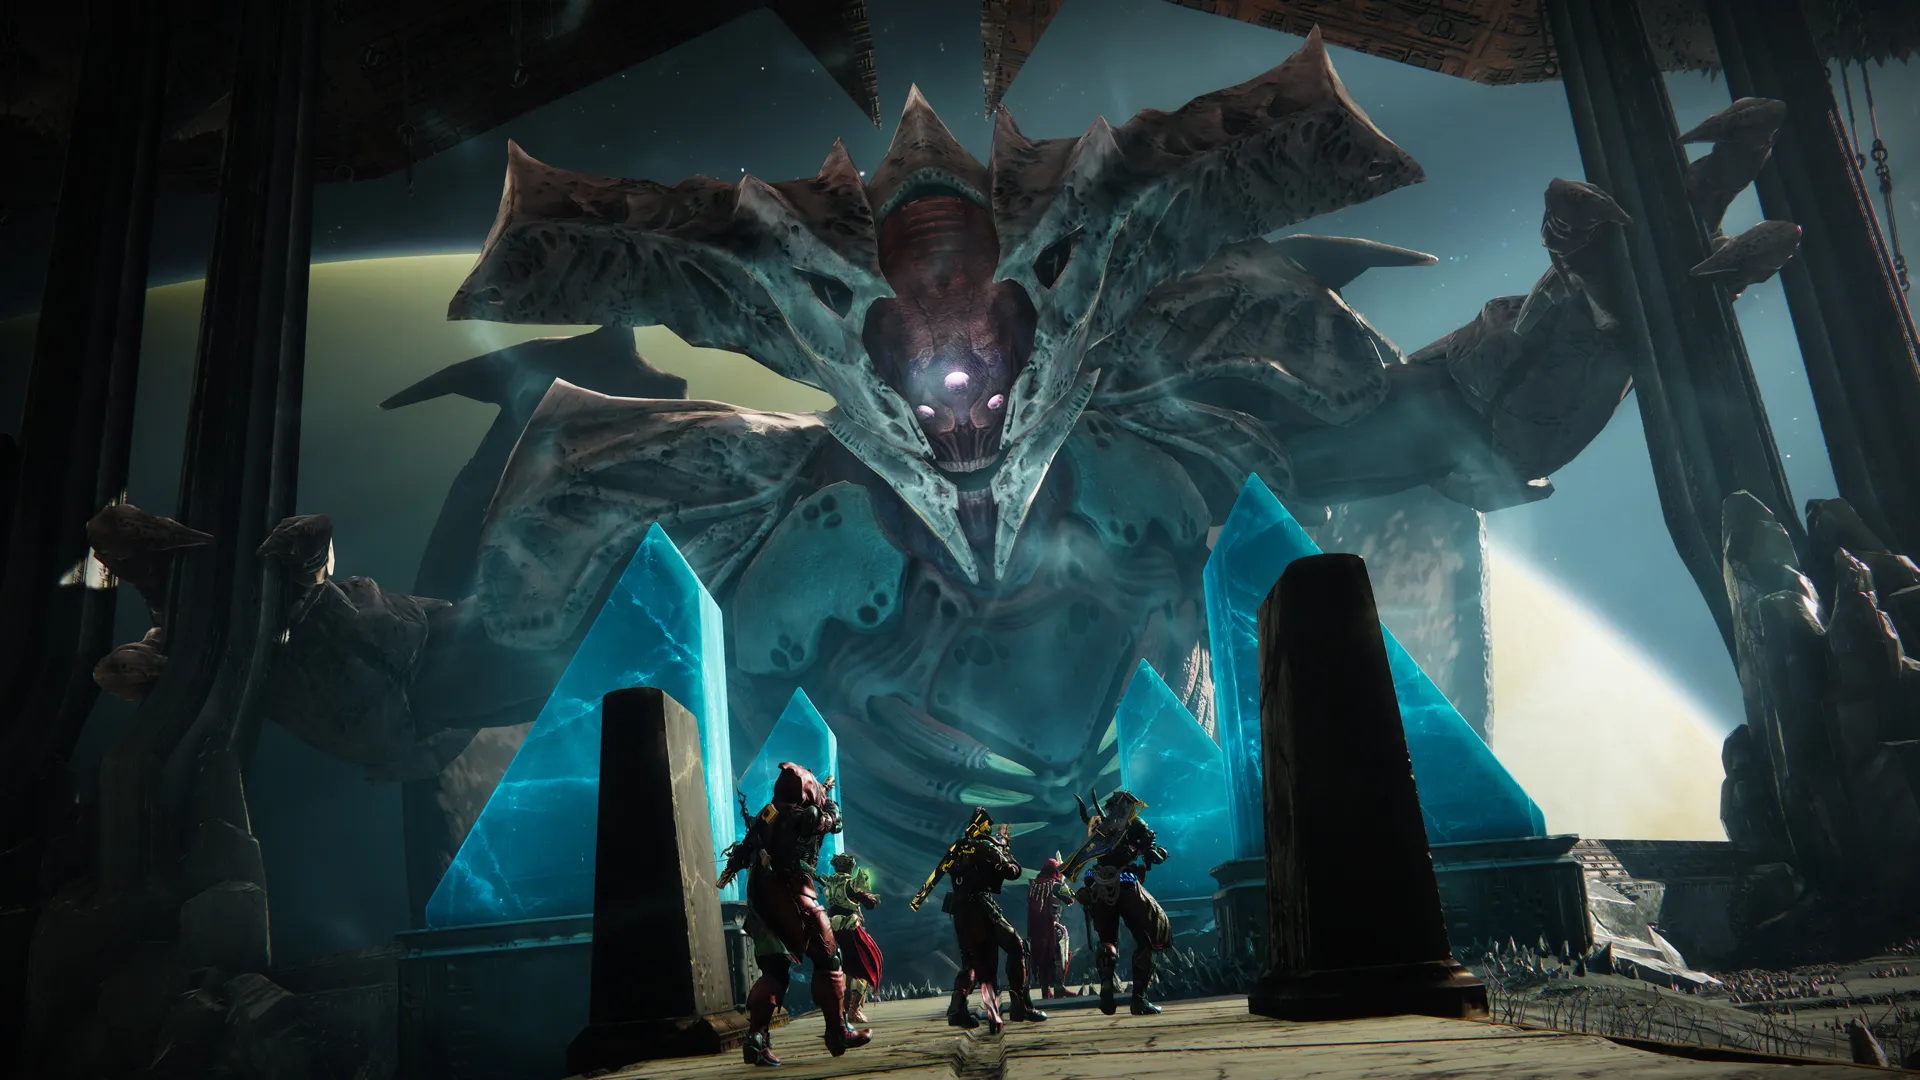 Oryx in King's Fall raid in Destiny 2